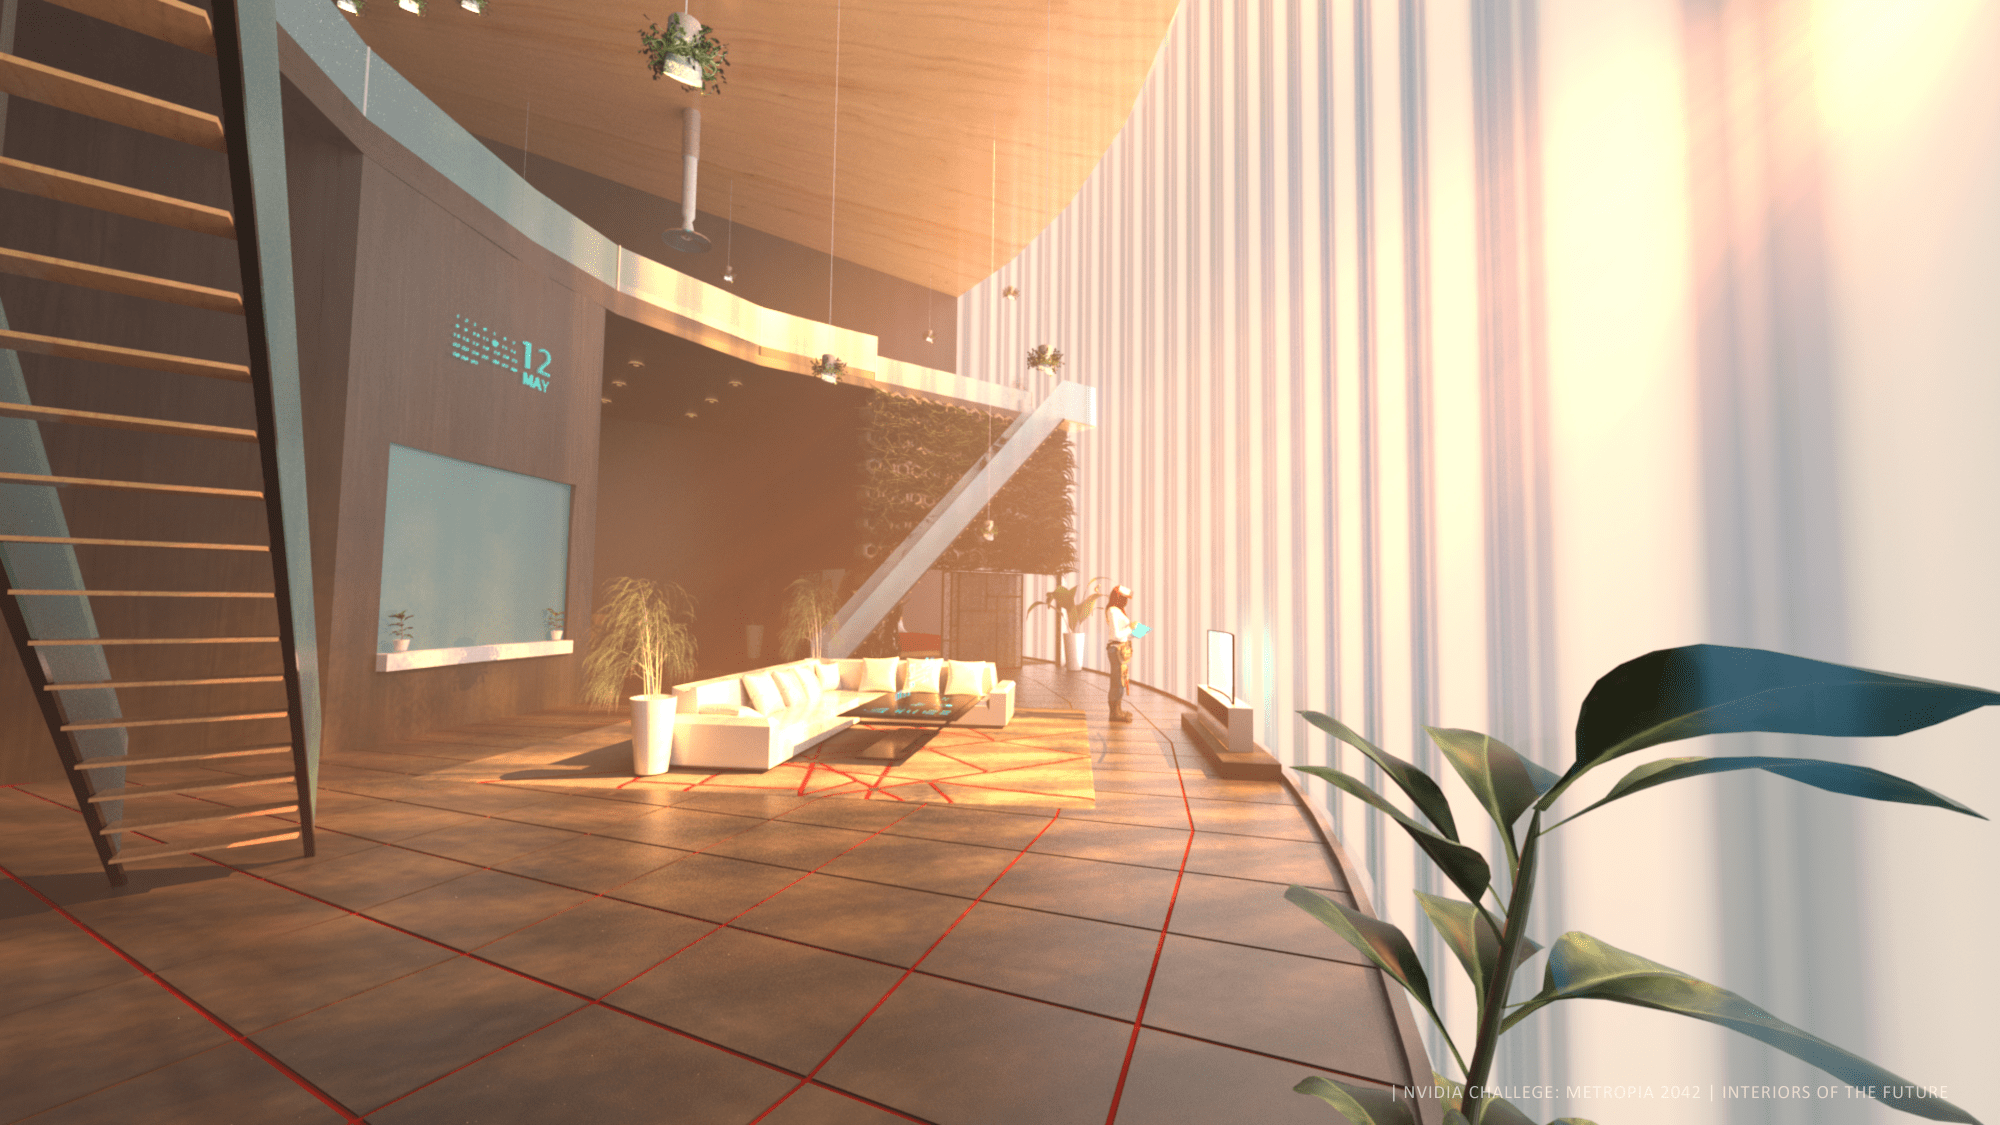 Nvidia Challenge: Metropia 2042 - Interiors of the Future